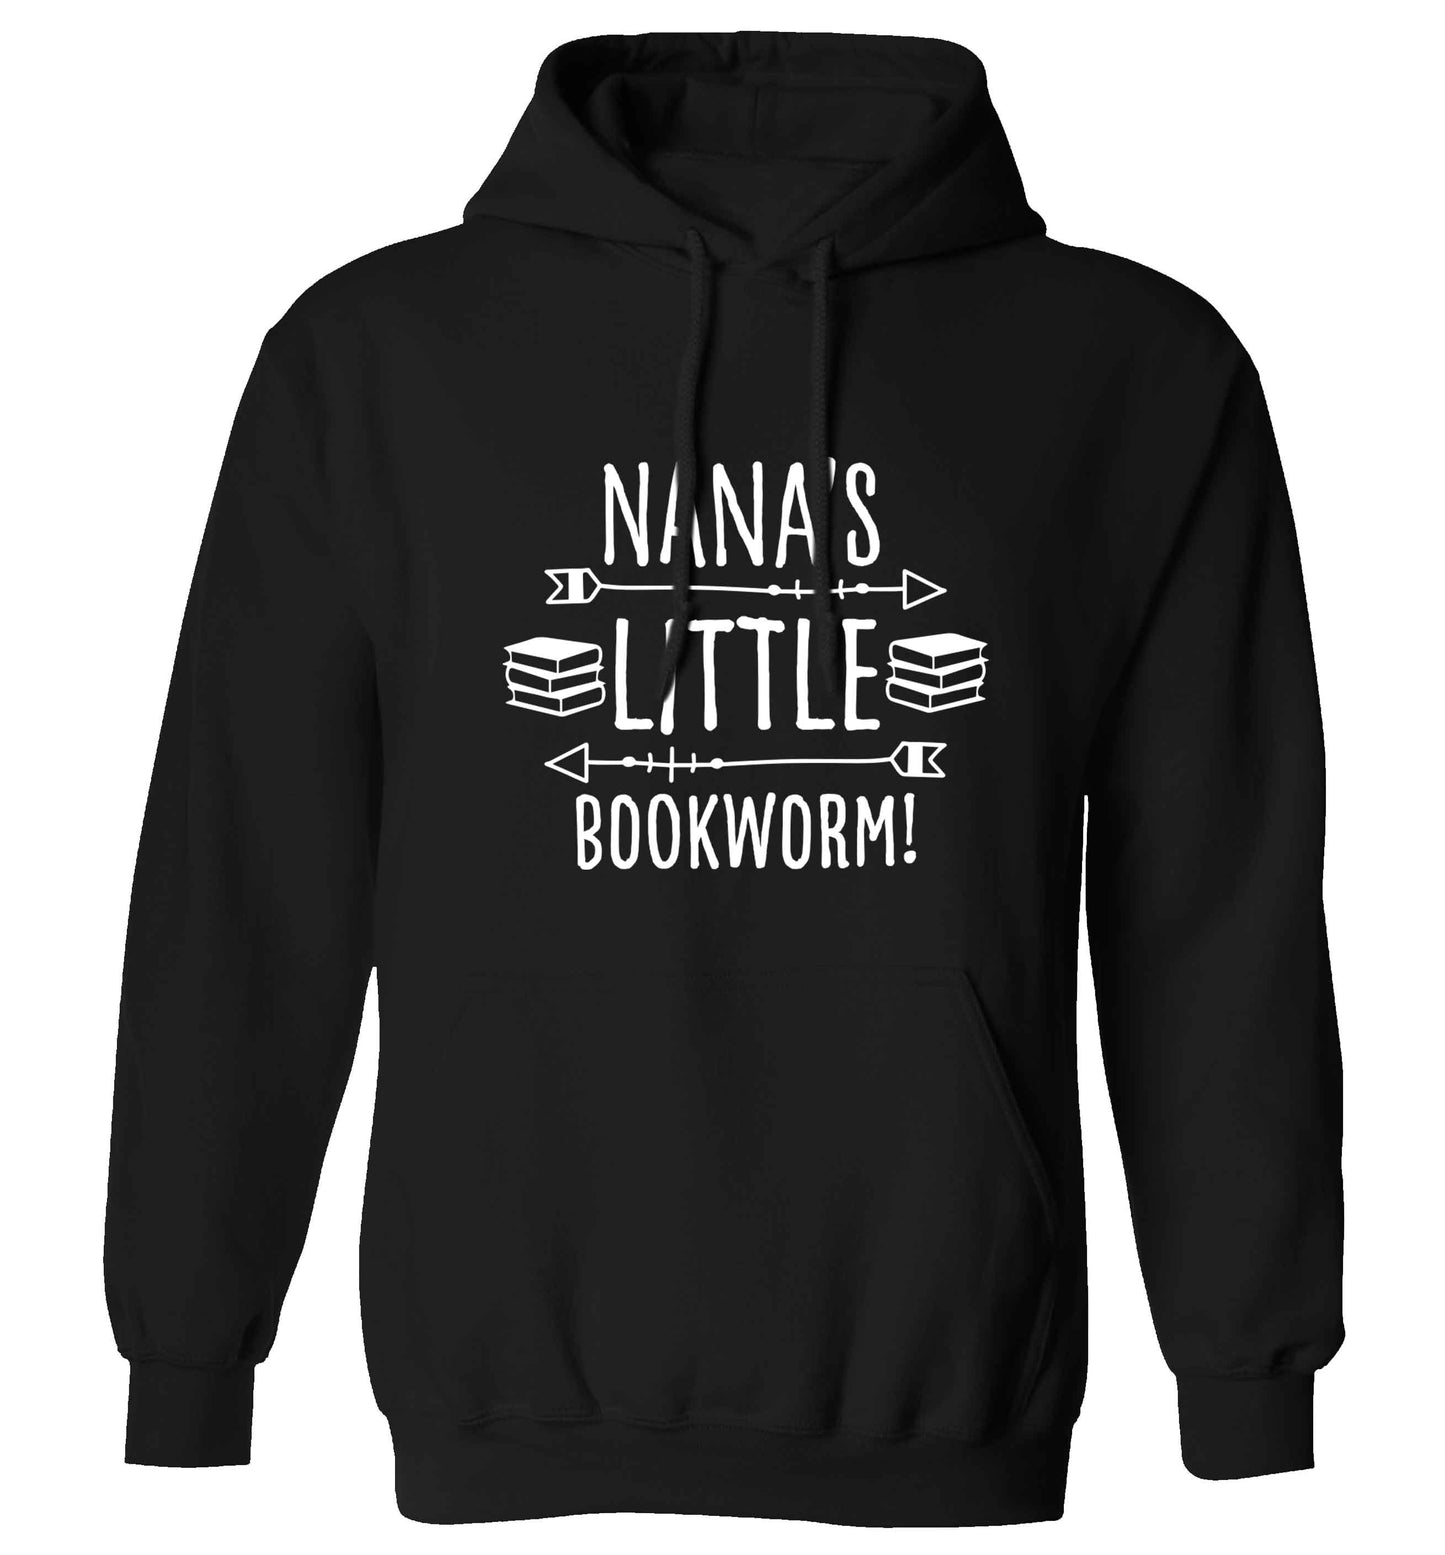 Nana's little bookworm adults unisex black hoodie 2XL